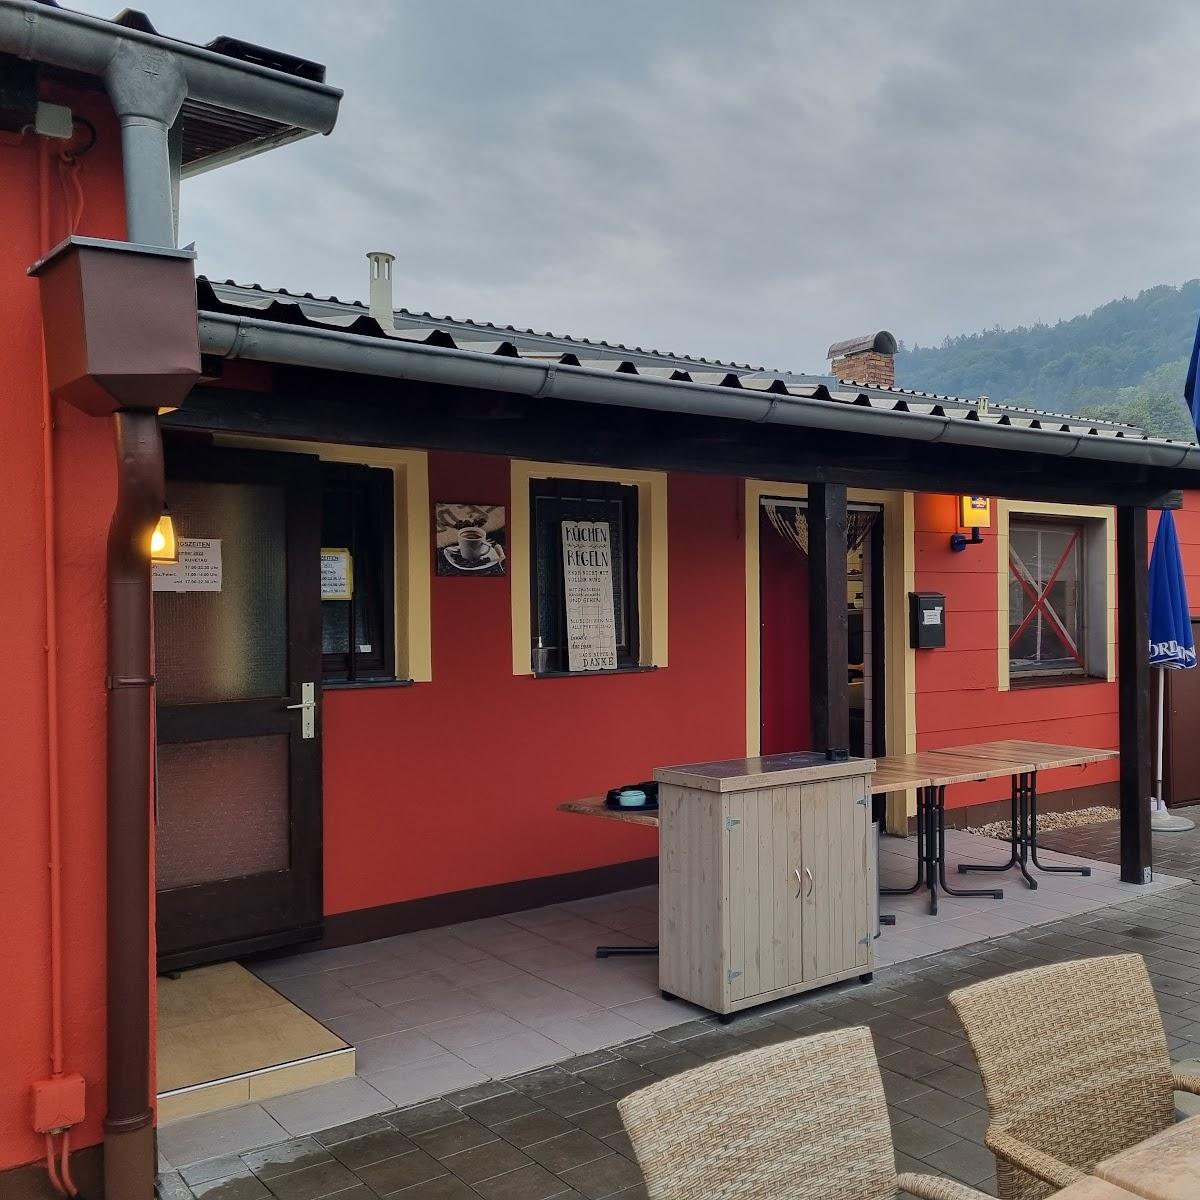 Restaurant "Volare" in Beilngries